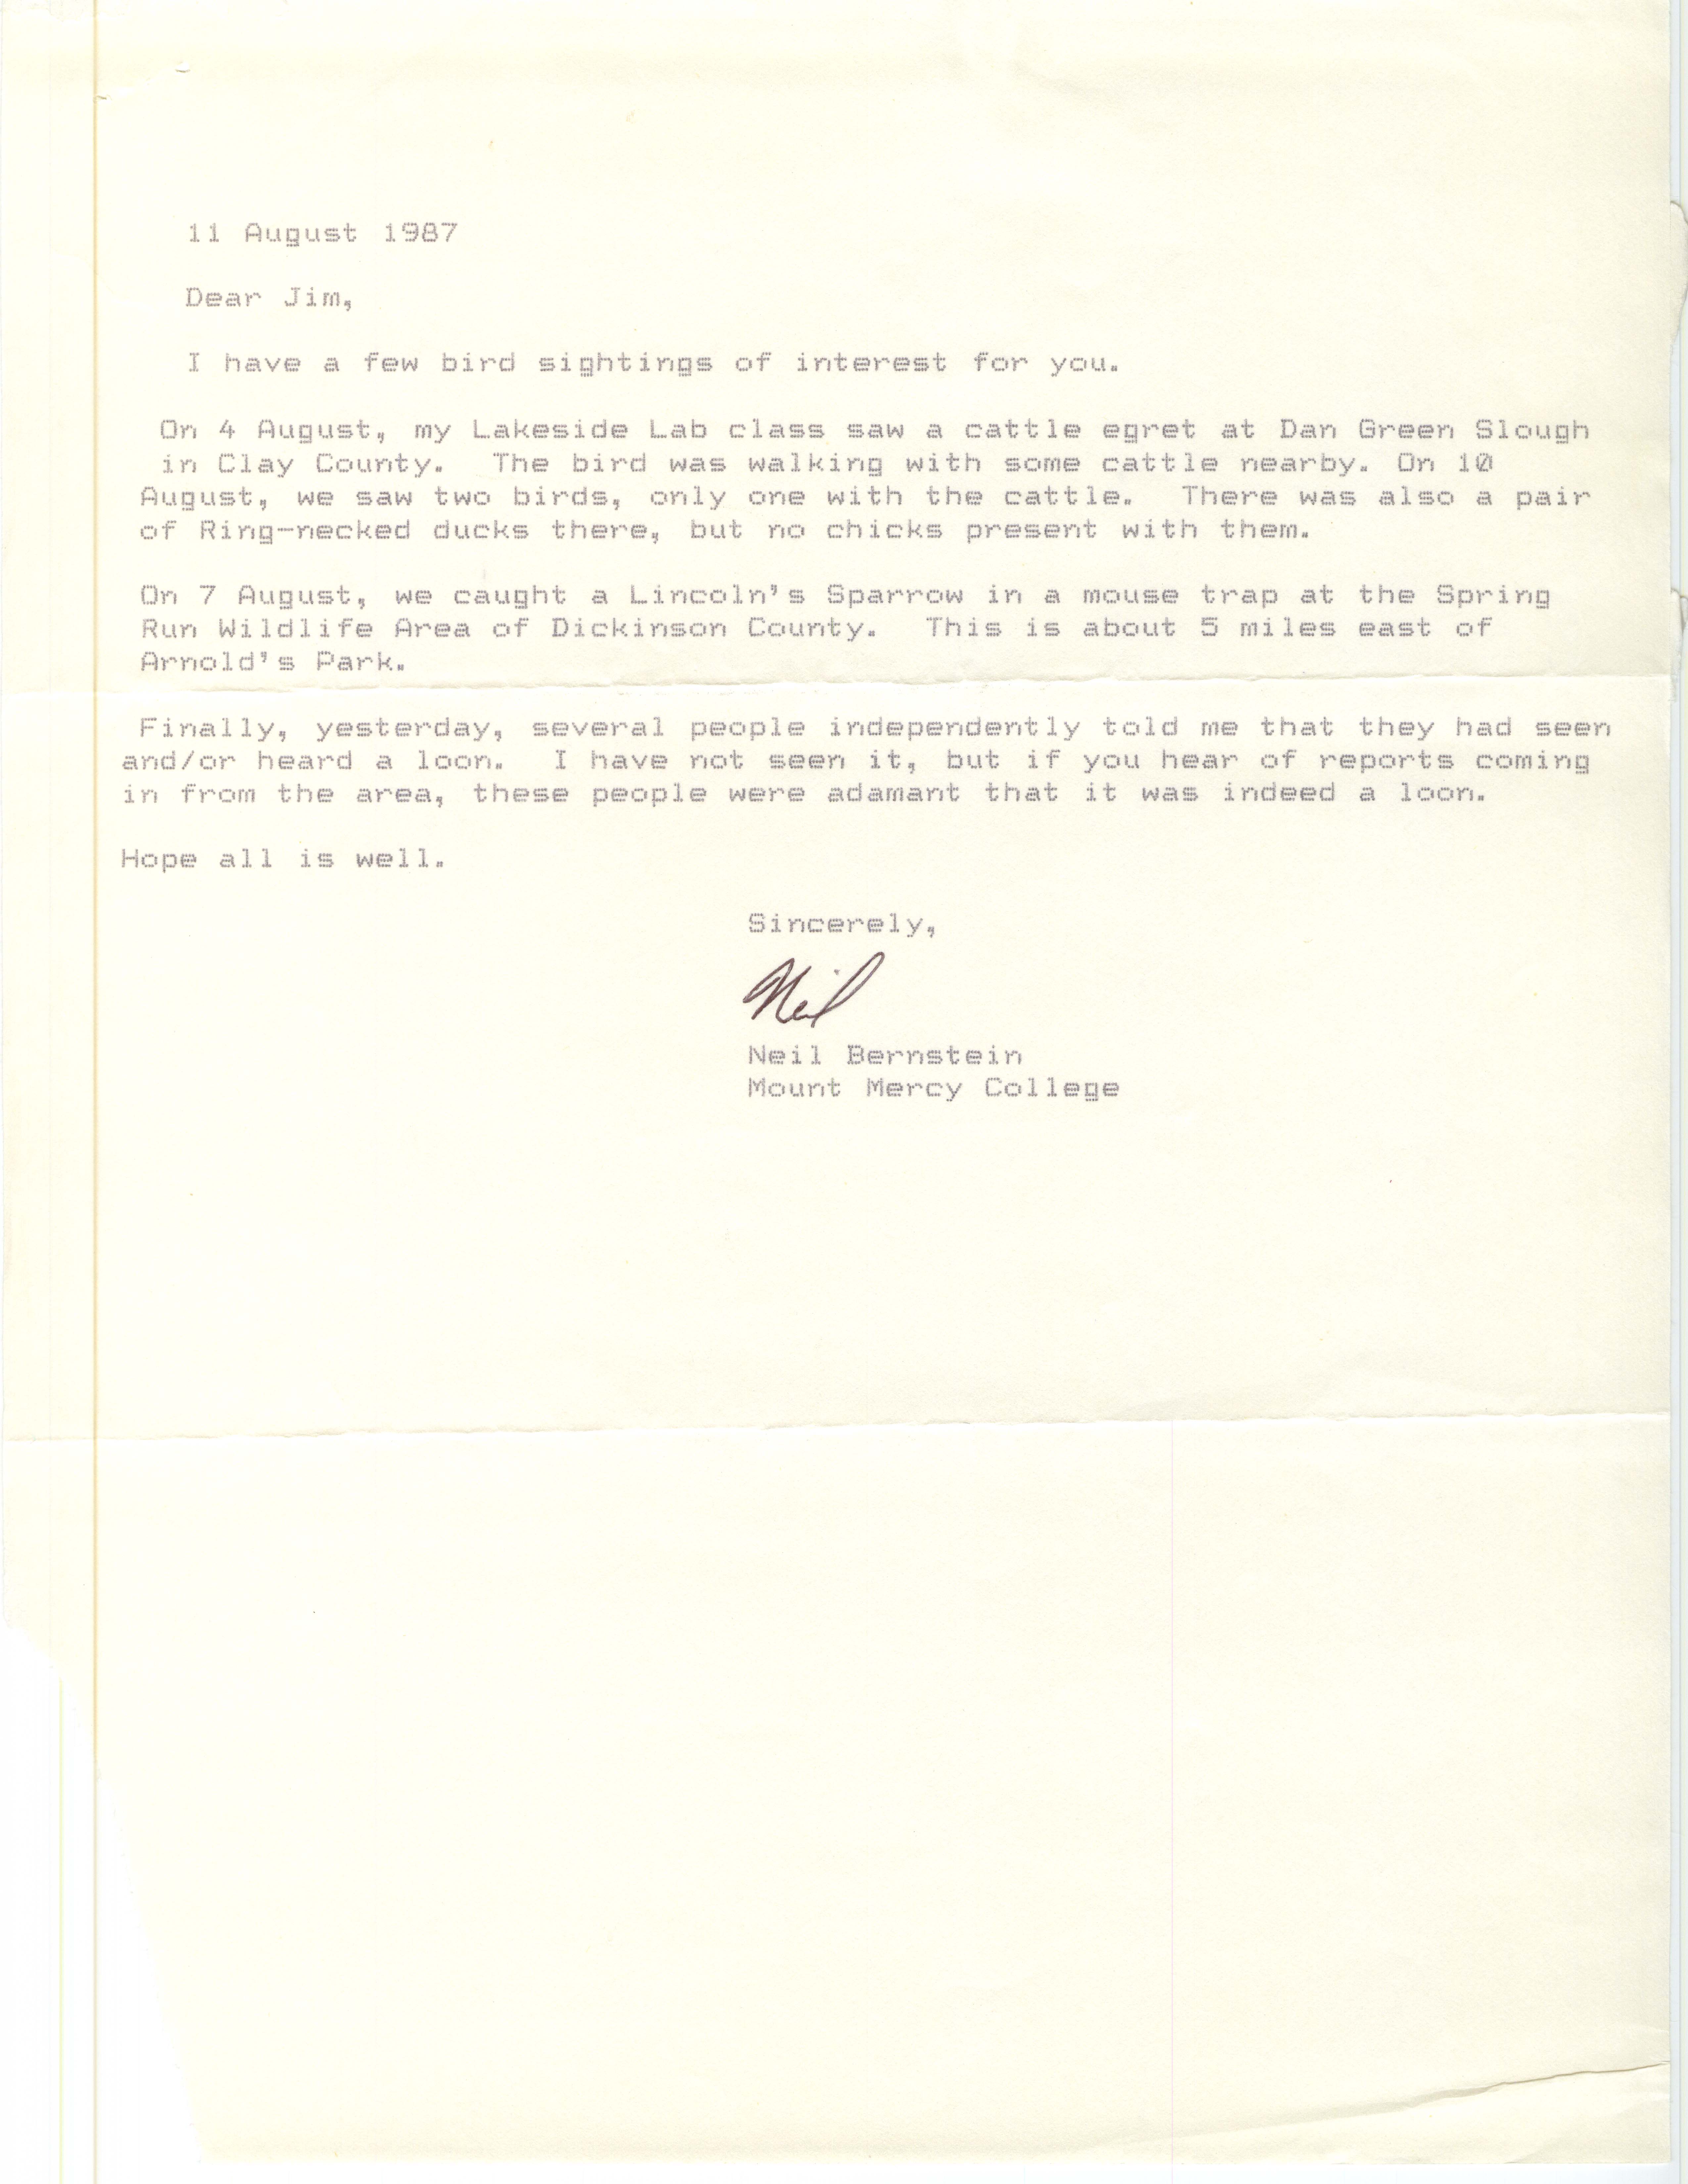 Neil Bernstein letter to James J. Dinsmore regarding fall bird sightings, August 11, 1987